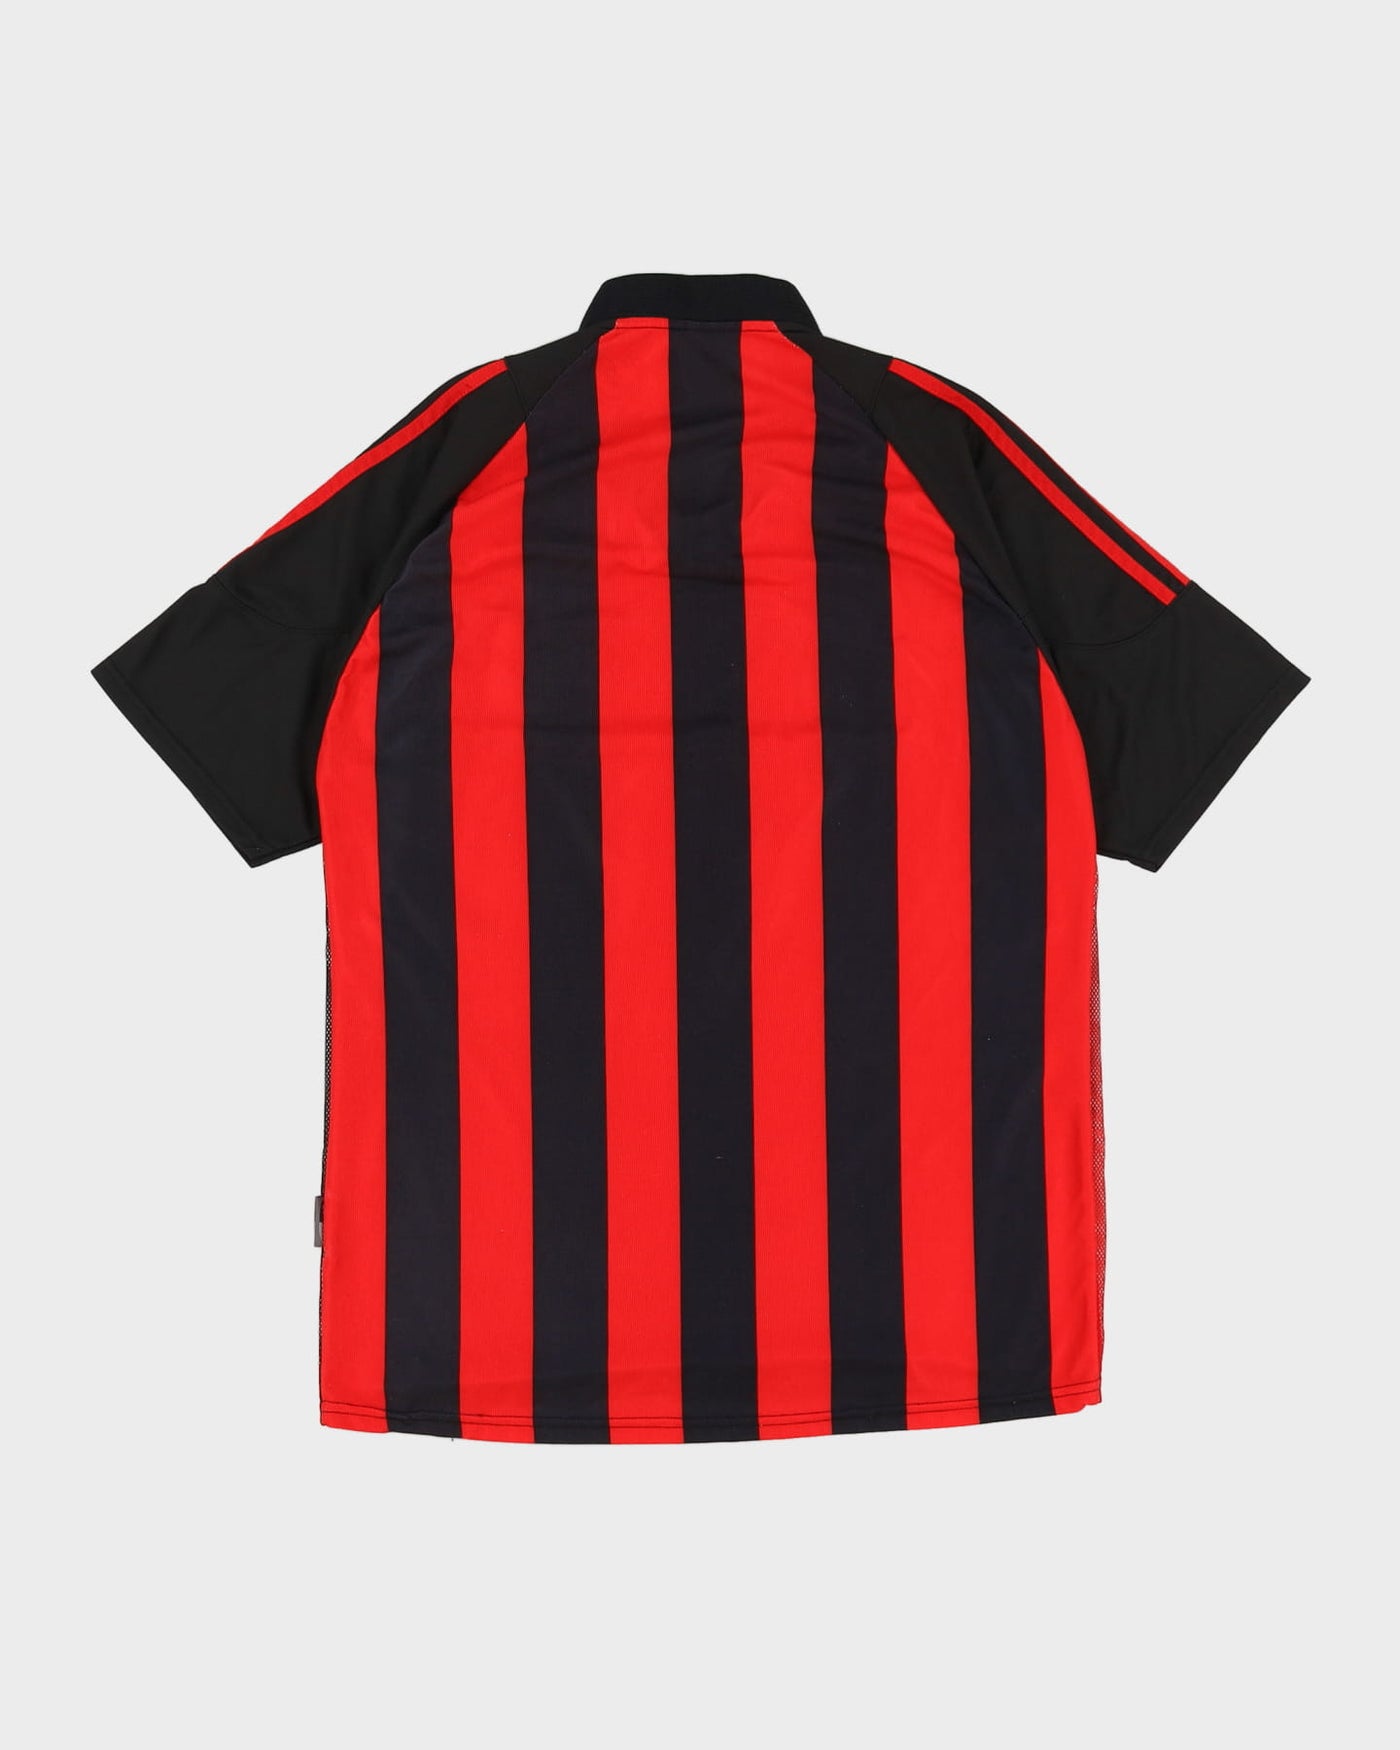 2002 AC Milan Adidas Black / Red Home Kit / Football Shirt / Jersey - L